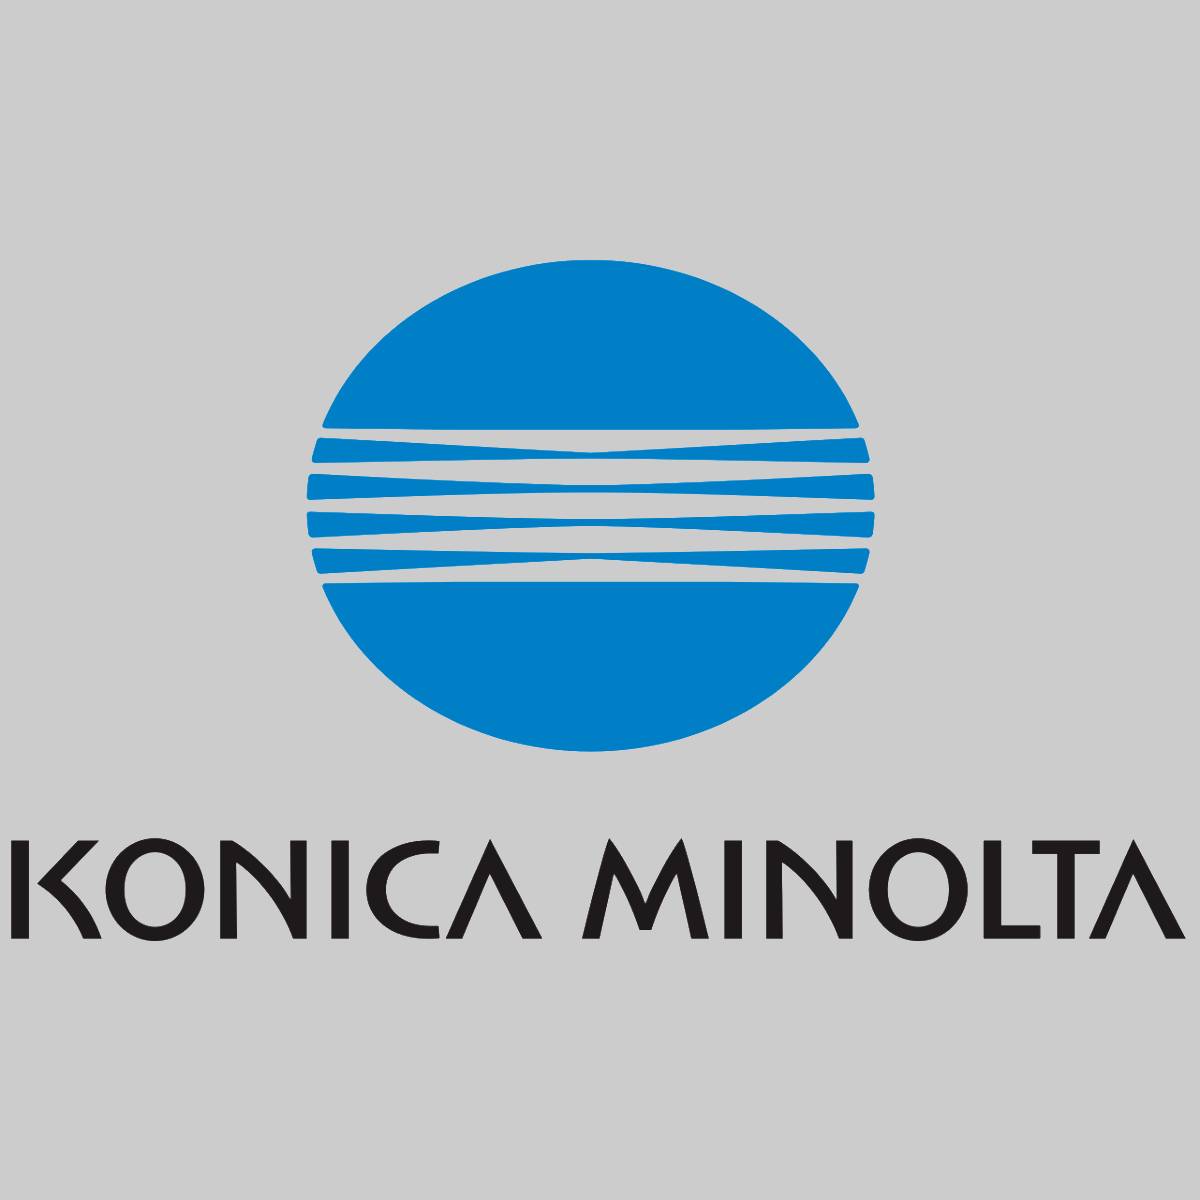 "Original Konica Minolta TN616M-L Magenta Toner A1U9252 for Bizhub Pro C6000 NEW